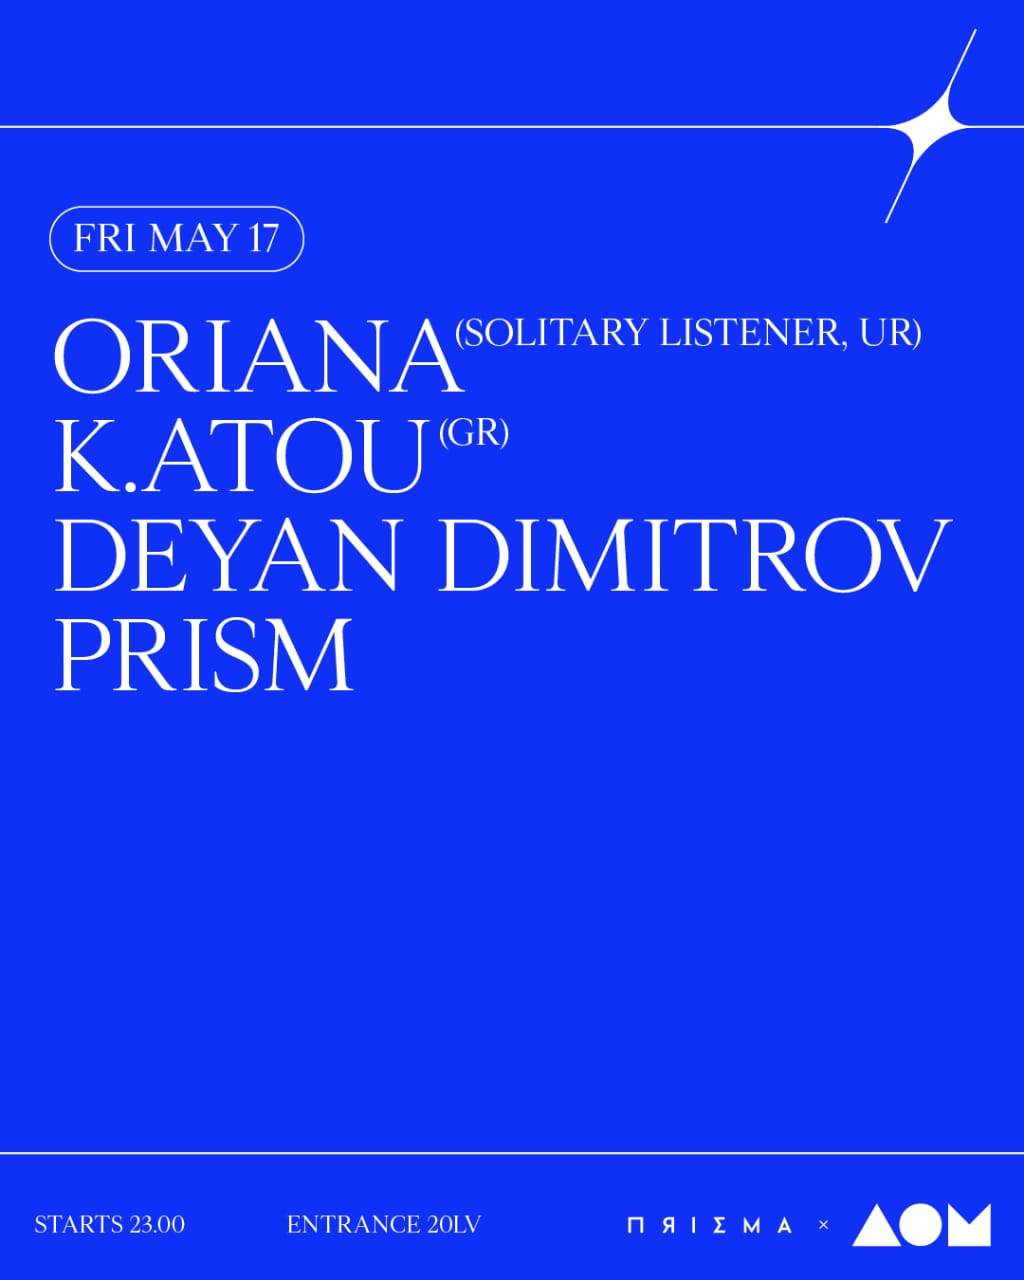 PRISM x CLUB DOM w / Oriana, K.atou, Deyan Dimitrov and PRISM - フライヤー表